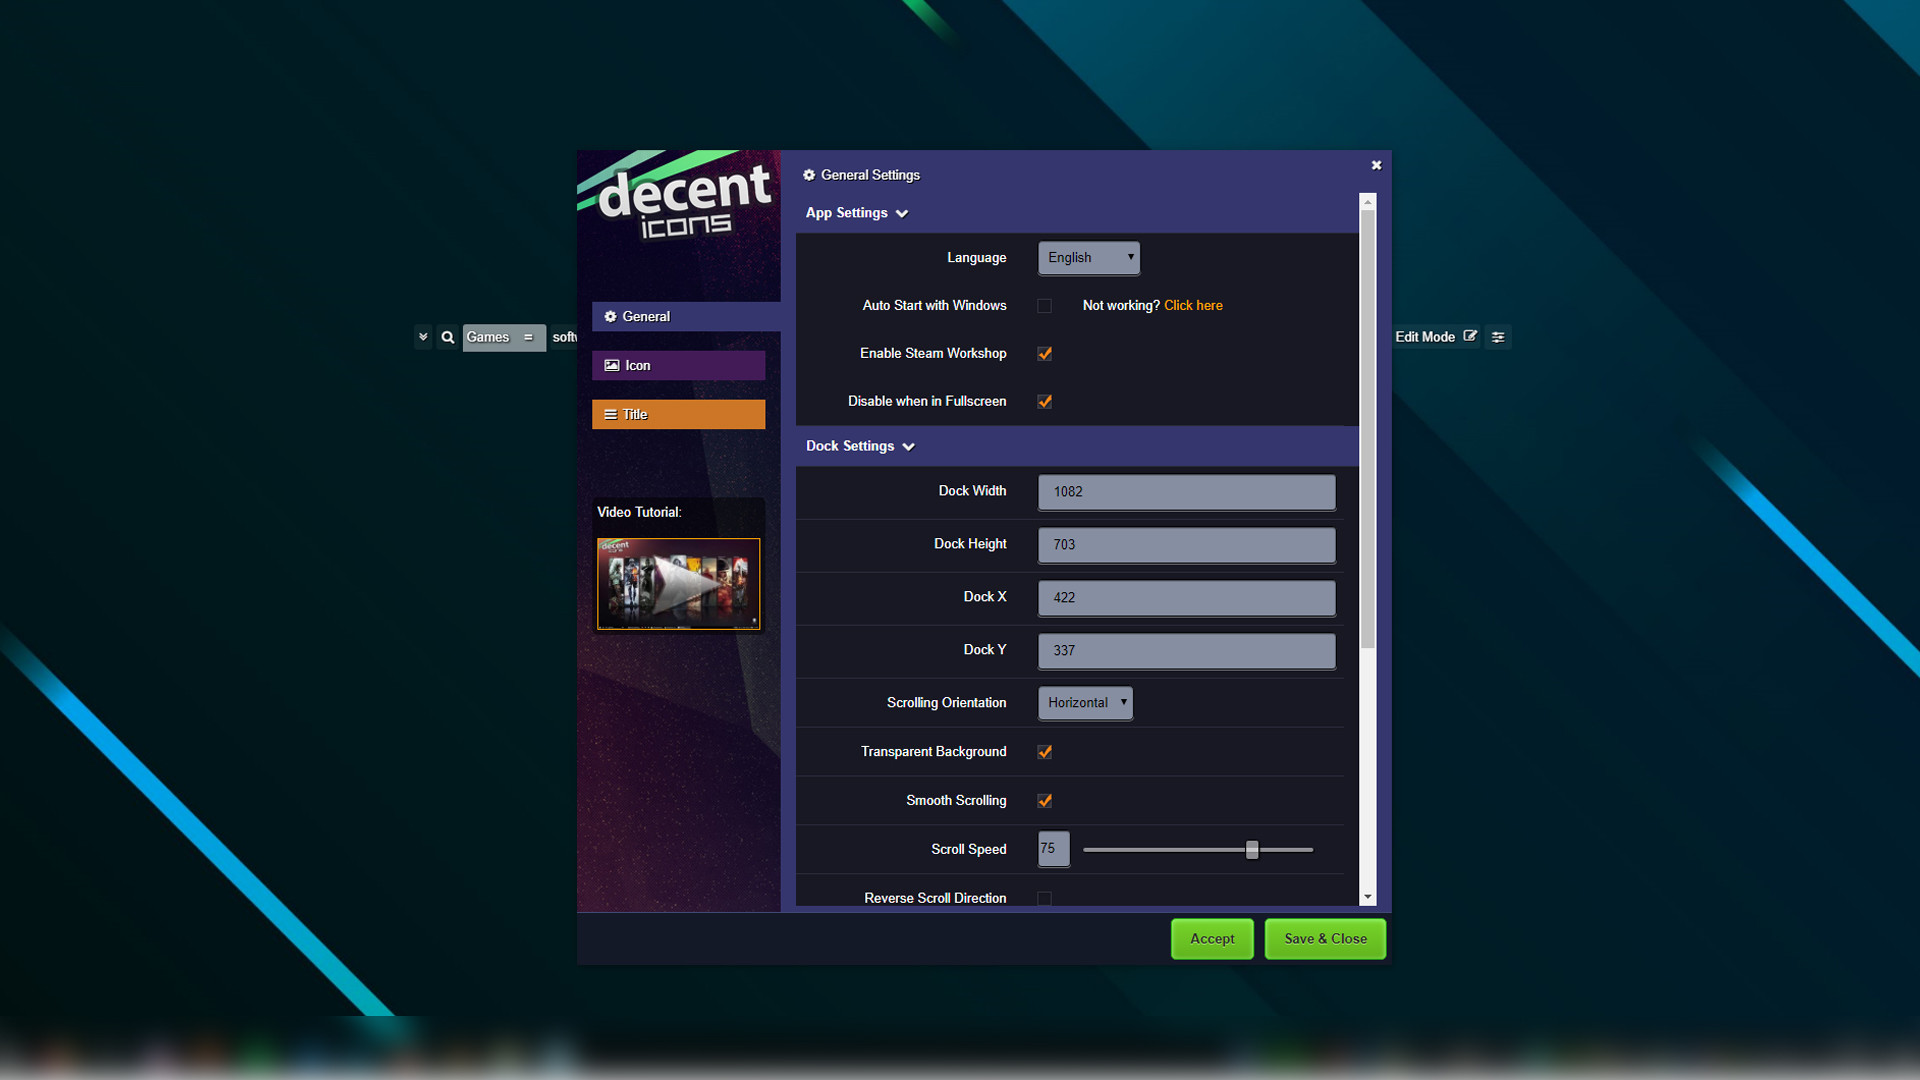 Decent Icons 2 Steam CD Key